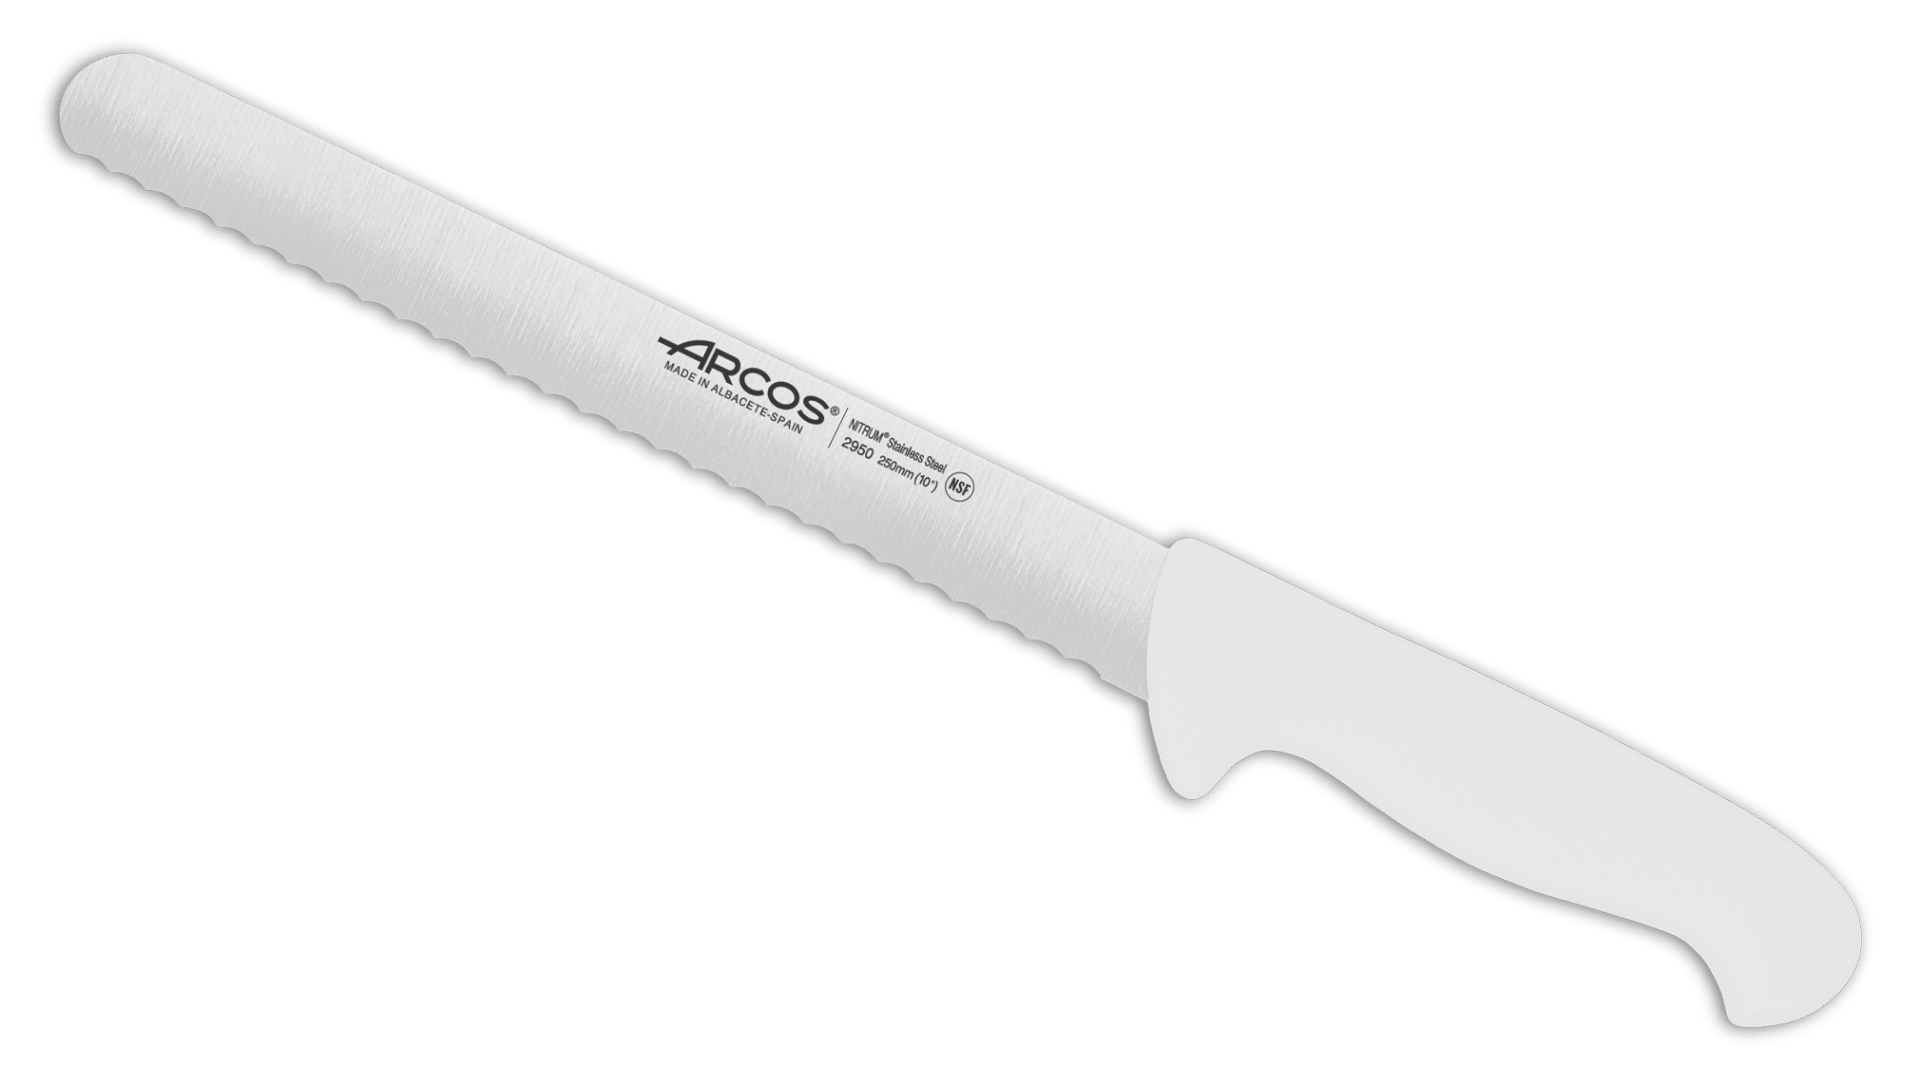 Arcos Pastry Knife/Cake Knife 10 Inch Nitrum Stainless Steel and 250 mm  blade. Ergonomic Polyoxymethylene POM Handle. Polypropylene core with soft